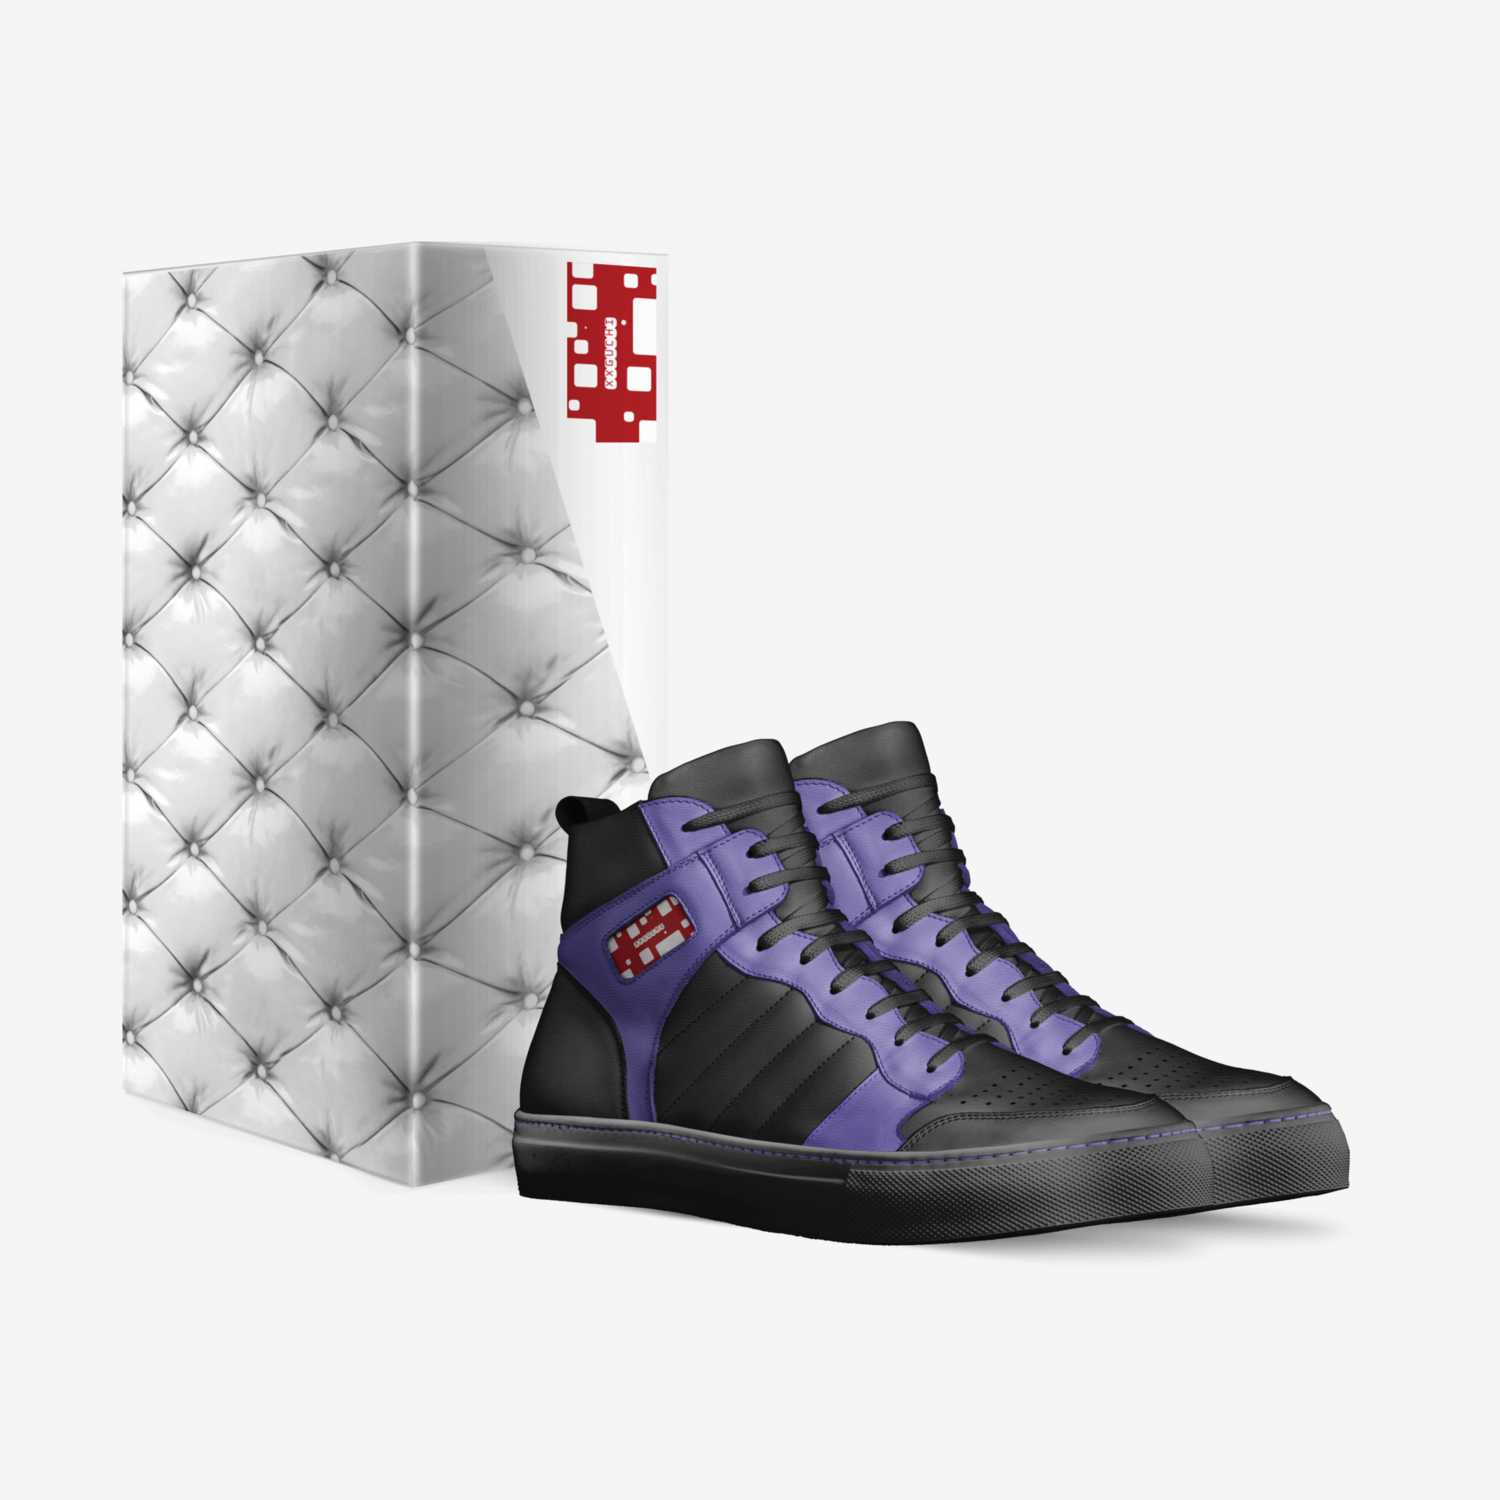 xxguchi custom made in Italy shoes by Zackjones | Box view